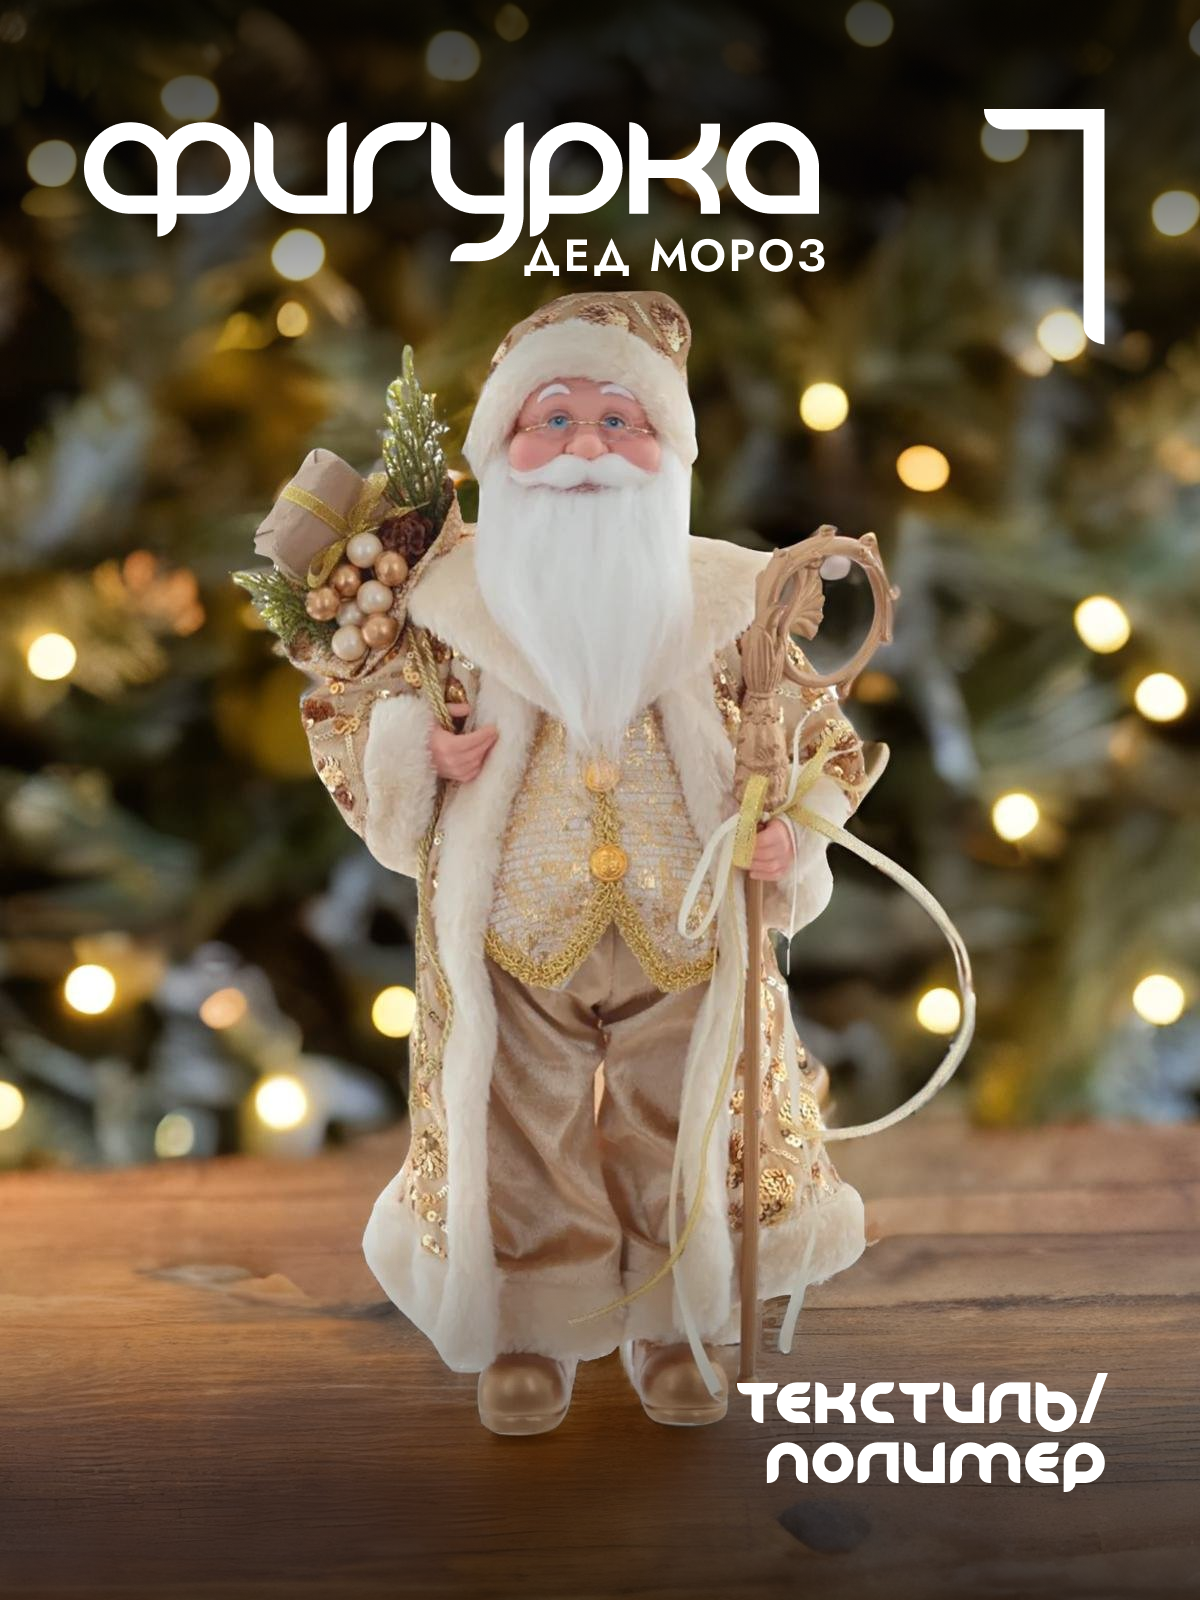 Декоративная фигурка Деда Мороза от Alat Home, артикул 761734, размеры 30x17x48 см.